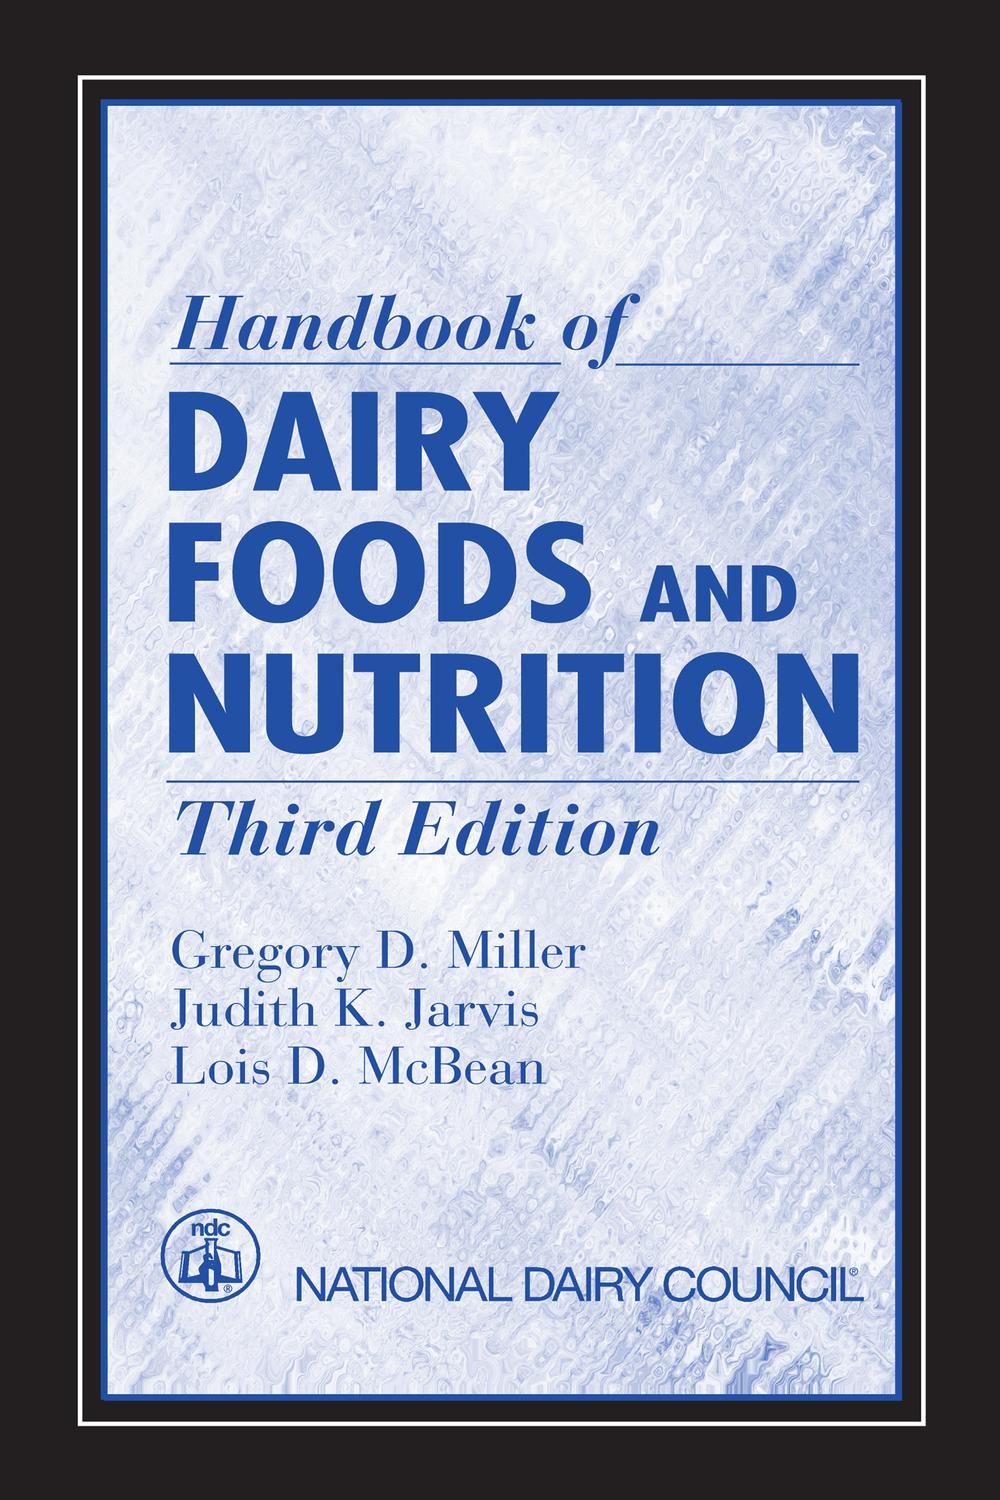 Handbook of Dairy Foods and Nutrition - Gregory D. Miller, Judith K. Jarvis, Lois D. McBean